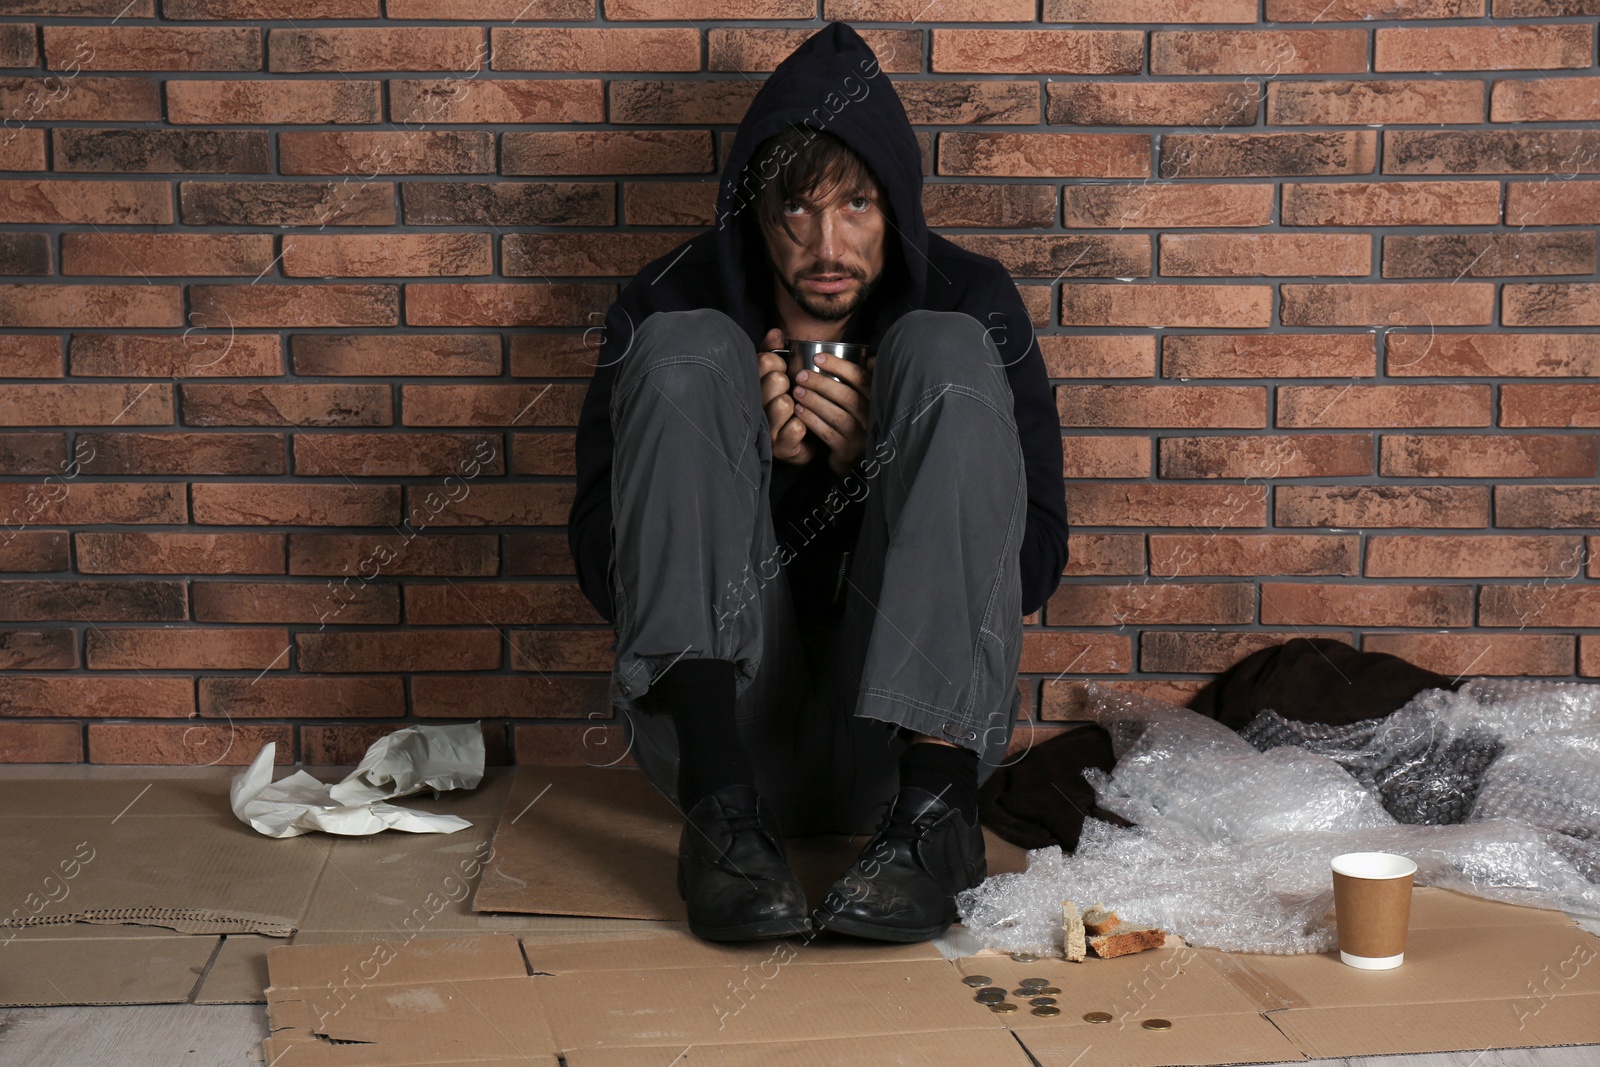 Photo of Poor man sitting with mug on floor near brick wall